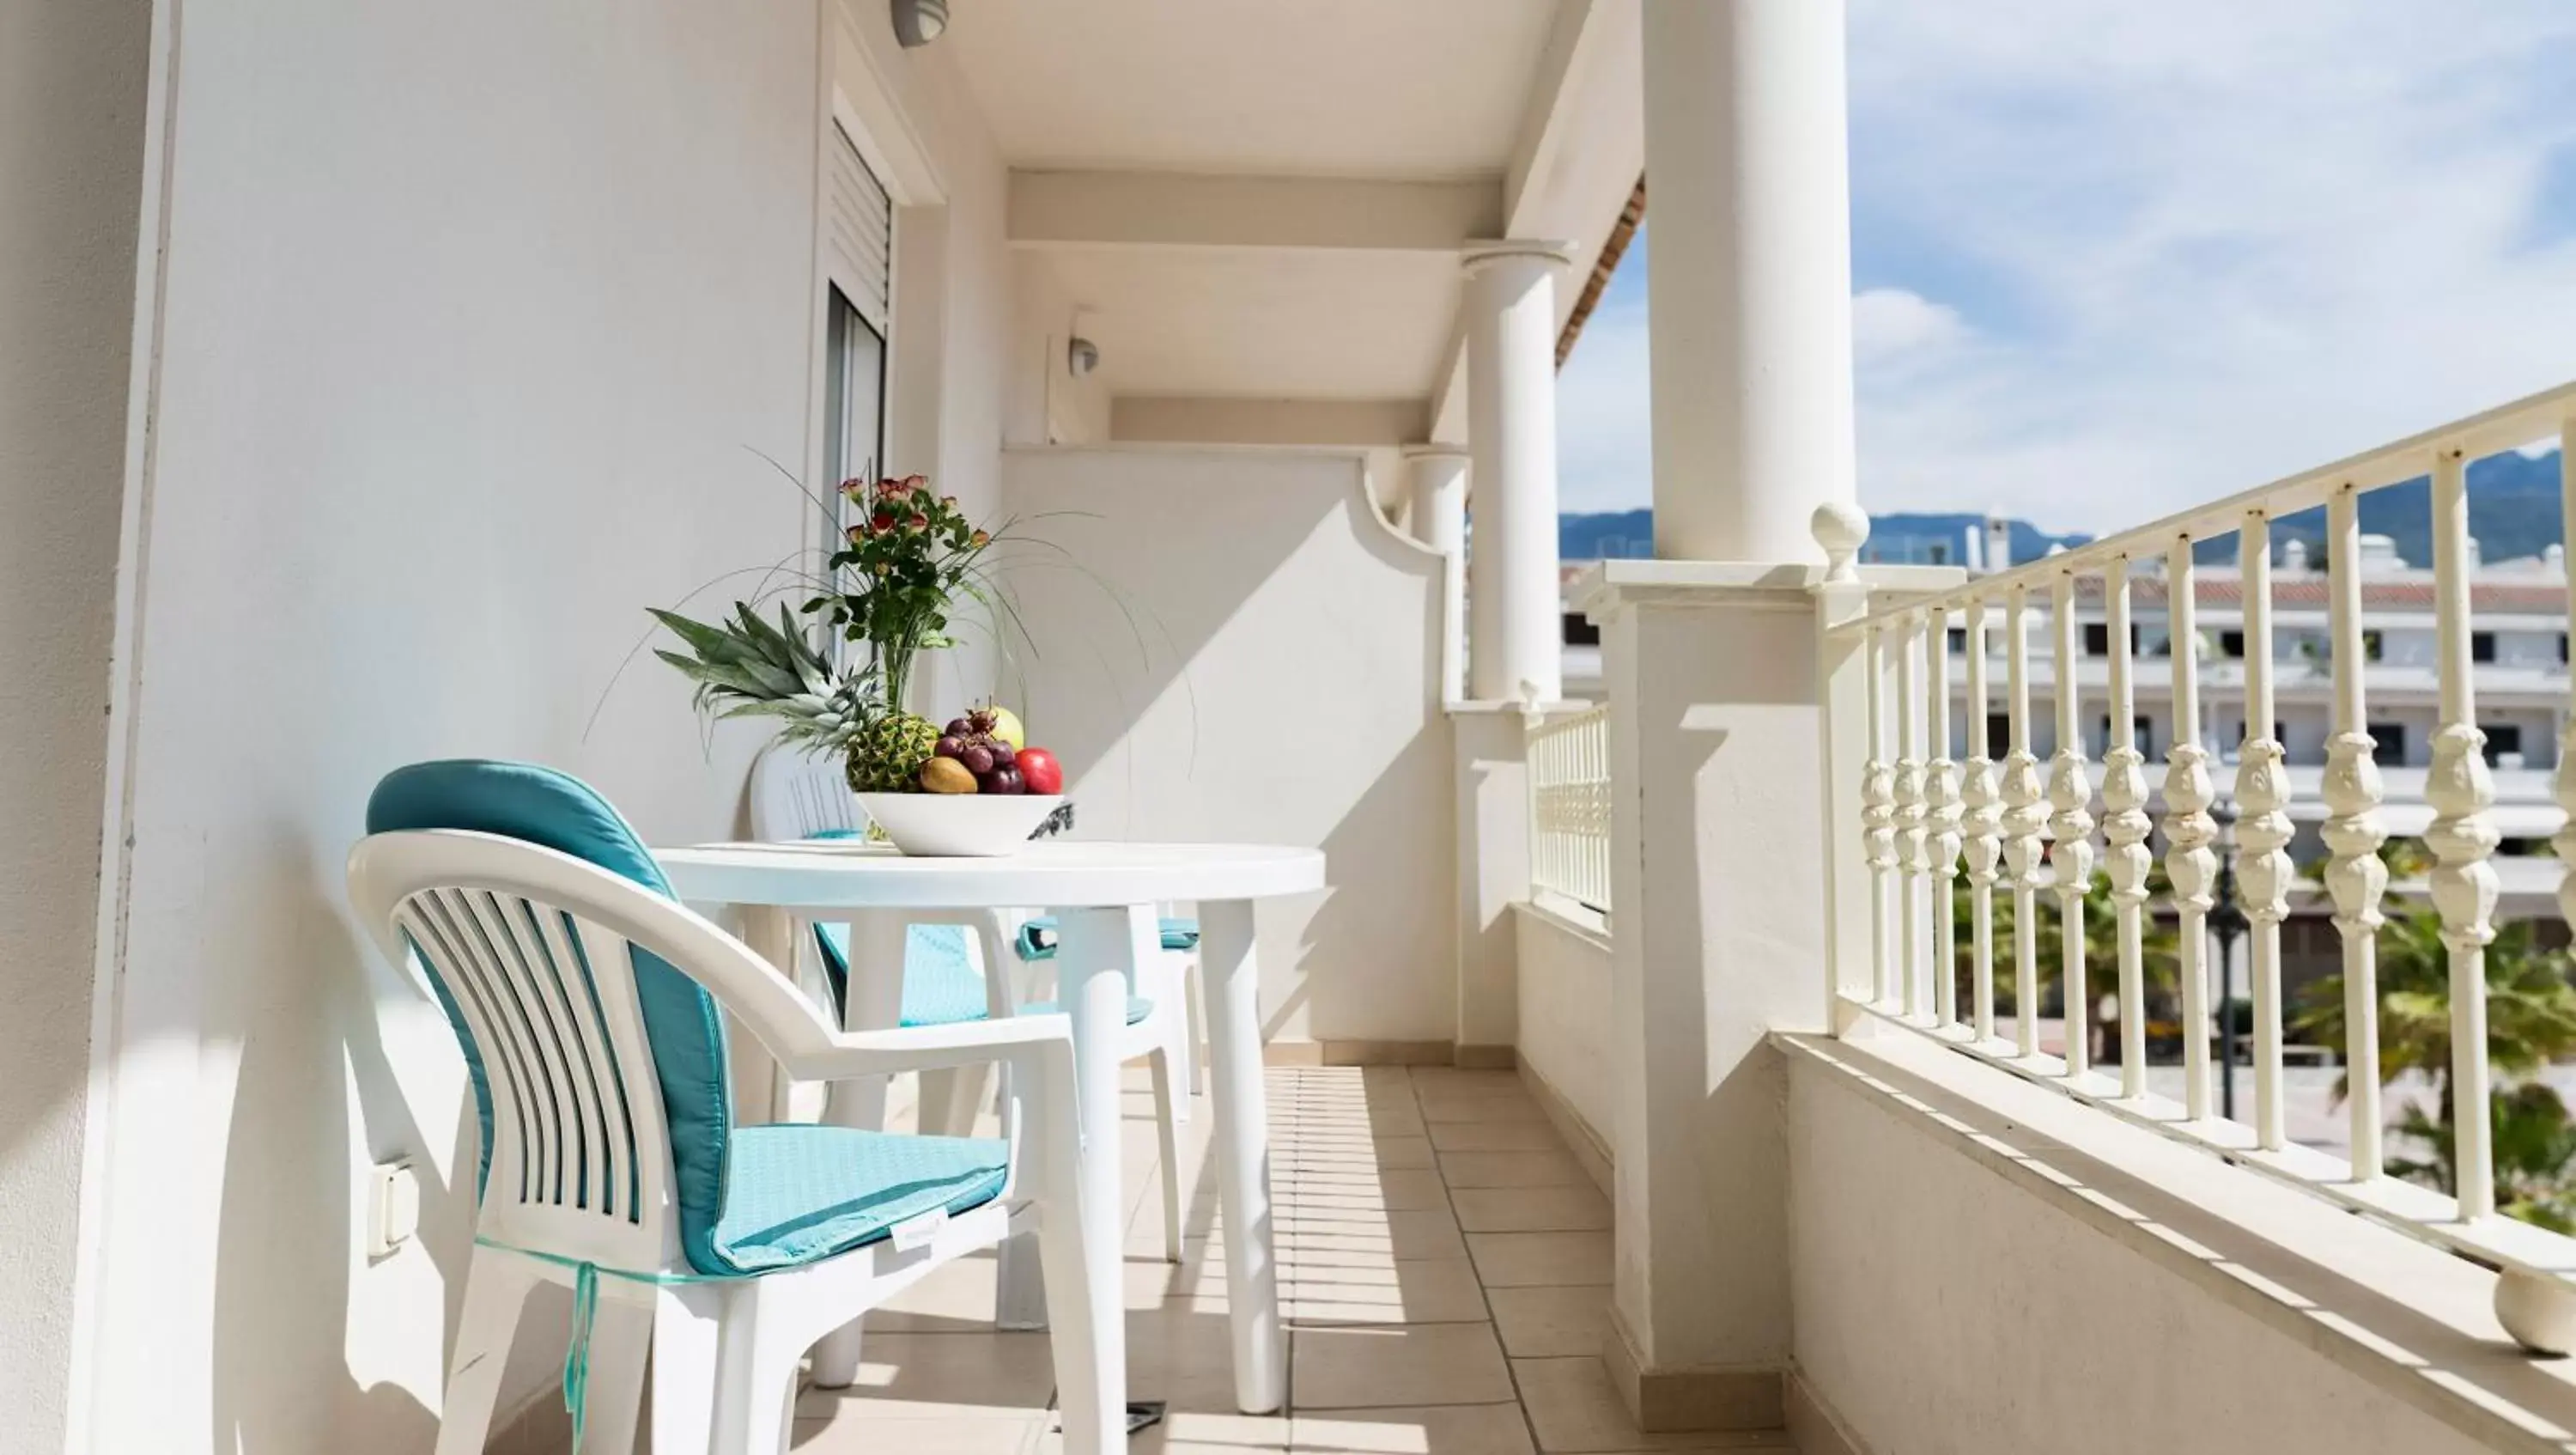 Balcony/Terrace, Patio/Outdoor Area in Mena Plaza